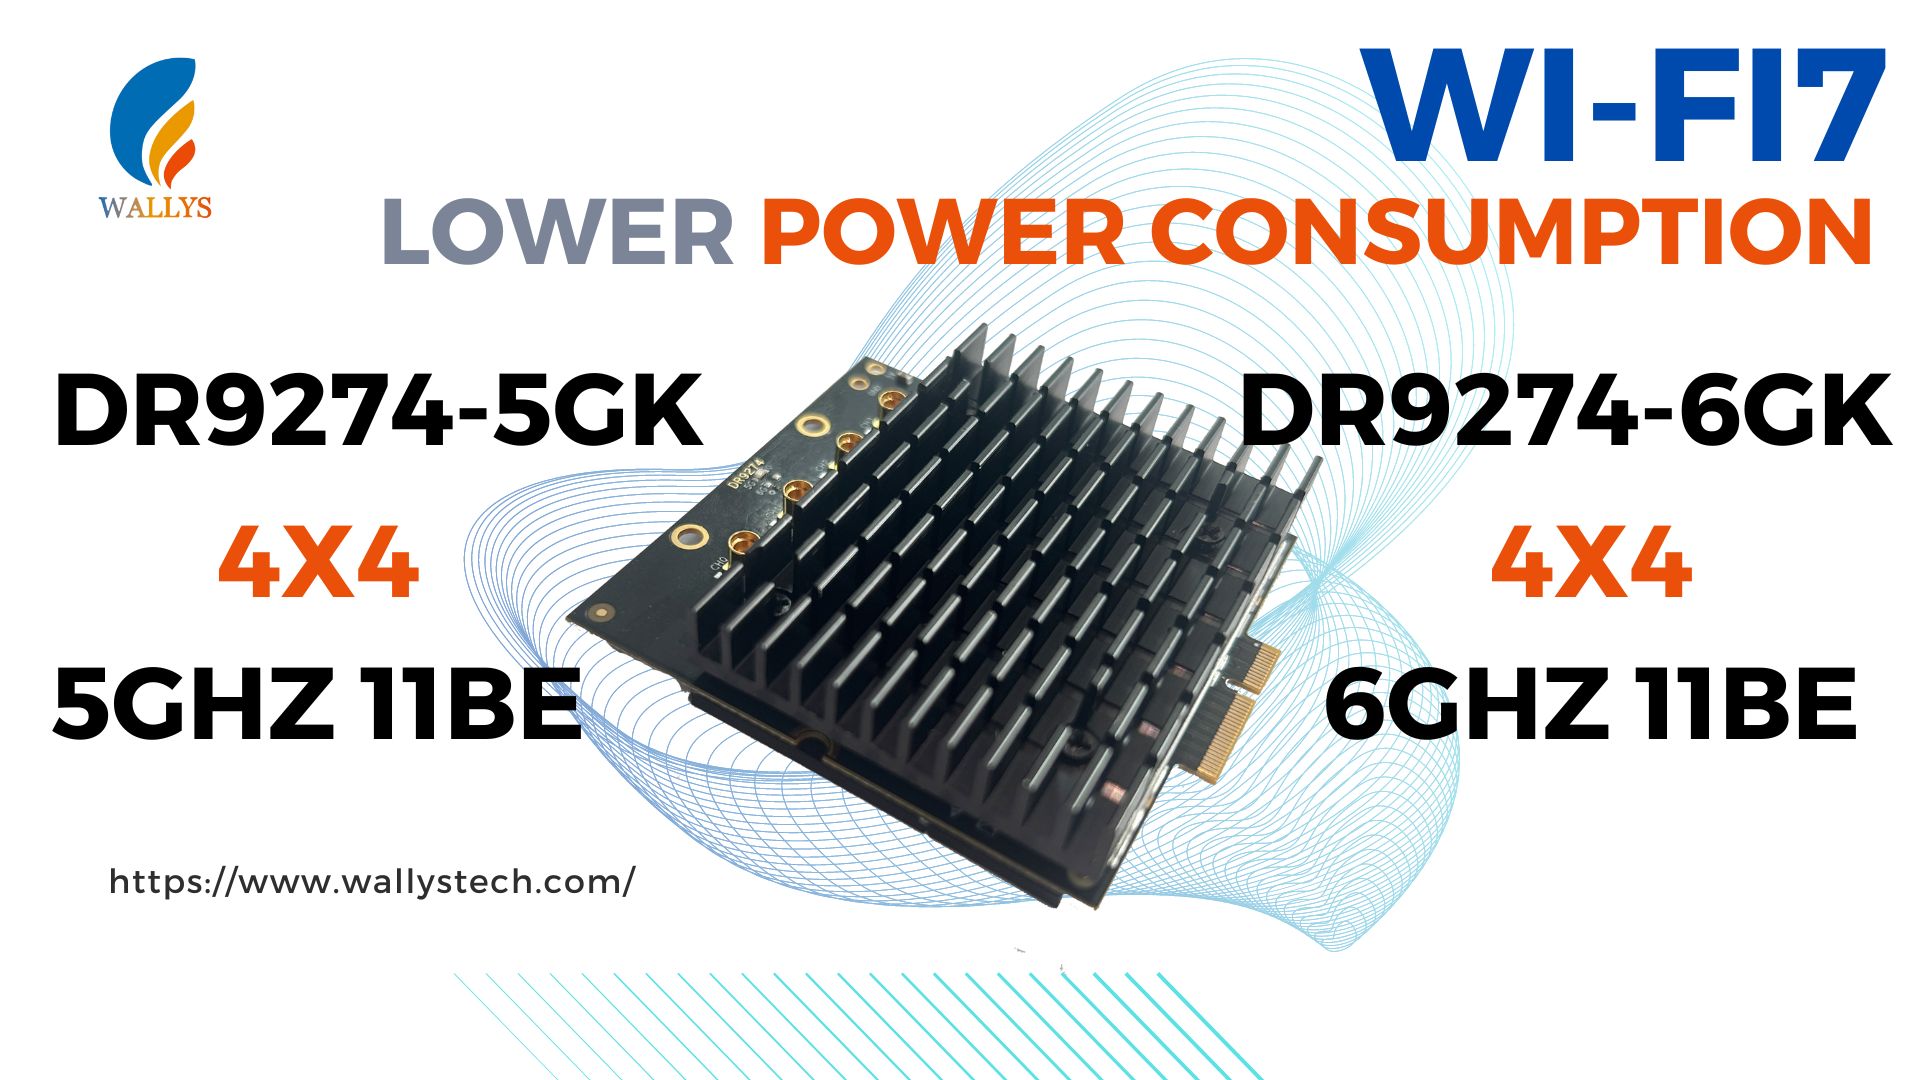 6E DBDC 4T4R QCN6224 QCN9274 QCN6274 WiFi7 Lower Power Consumption Network Card